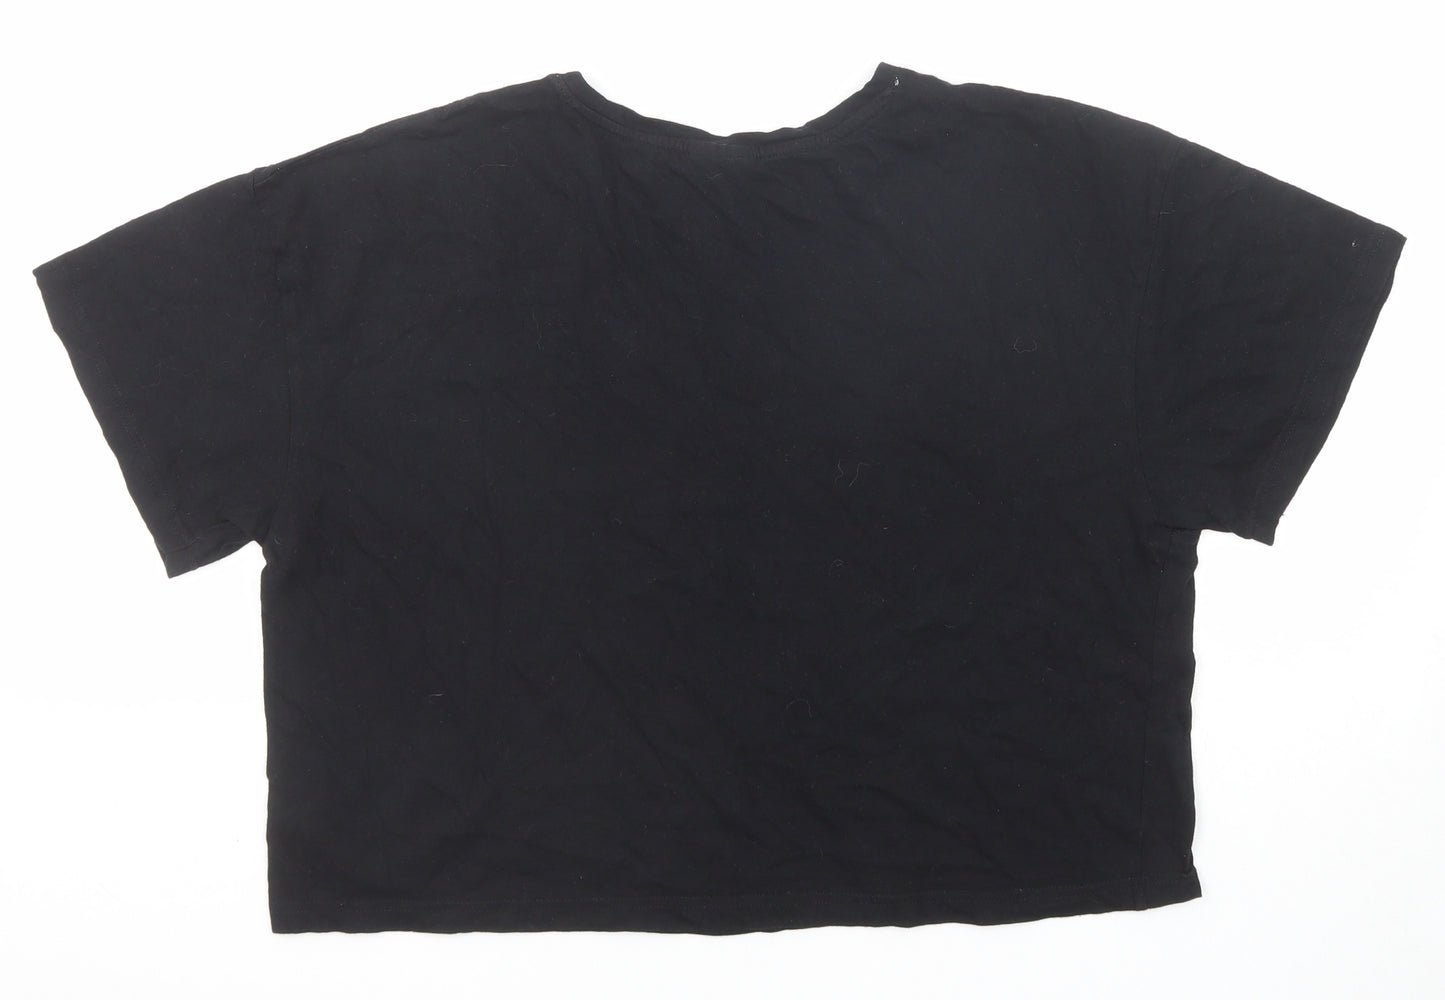 New Look Womens Black Cotton Basic T-Shirt Size M Crew Neck - Fabulous